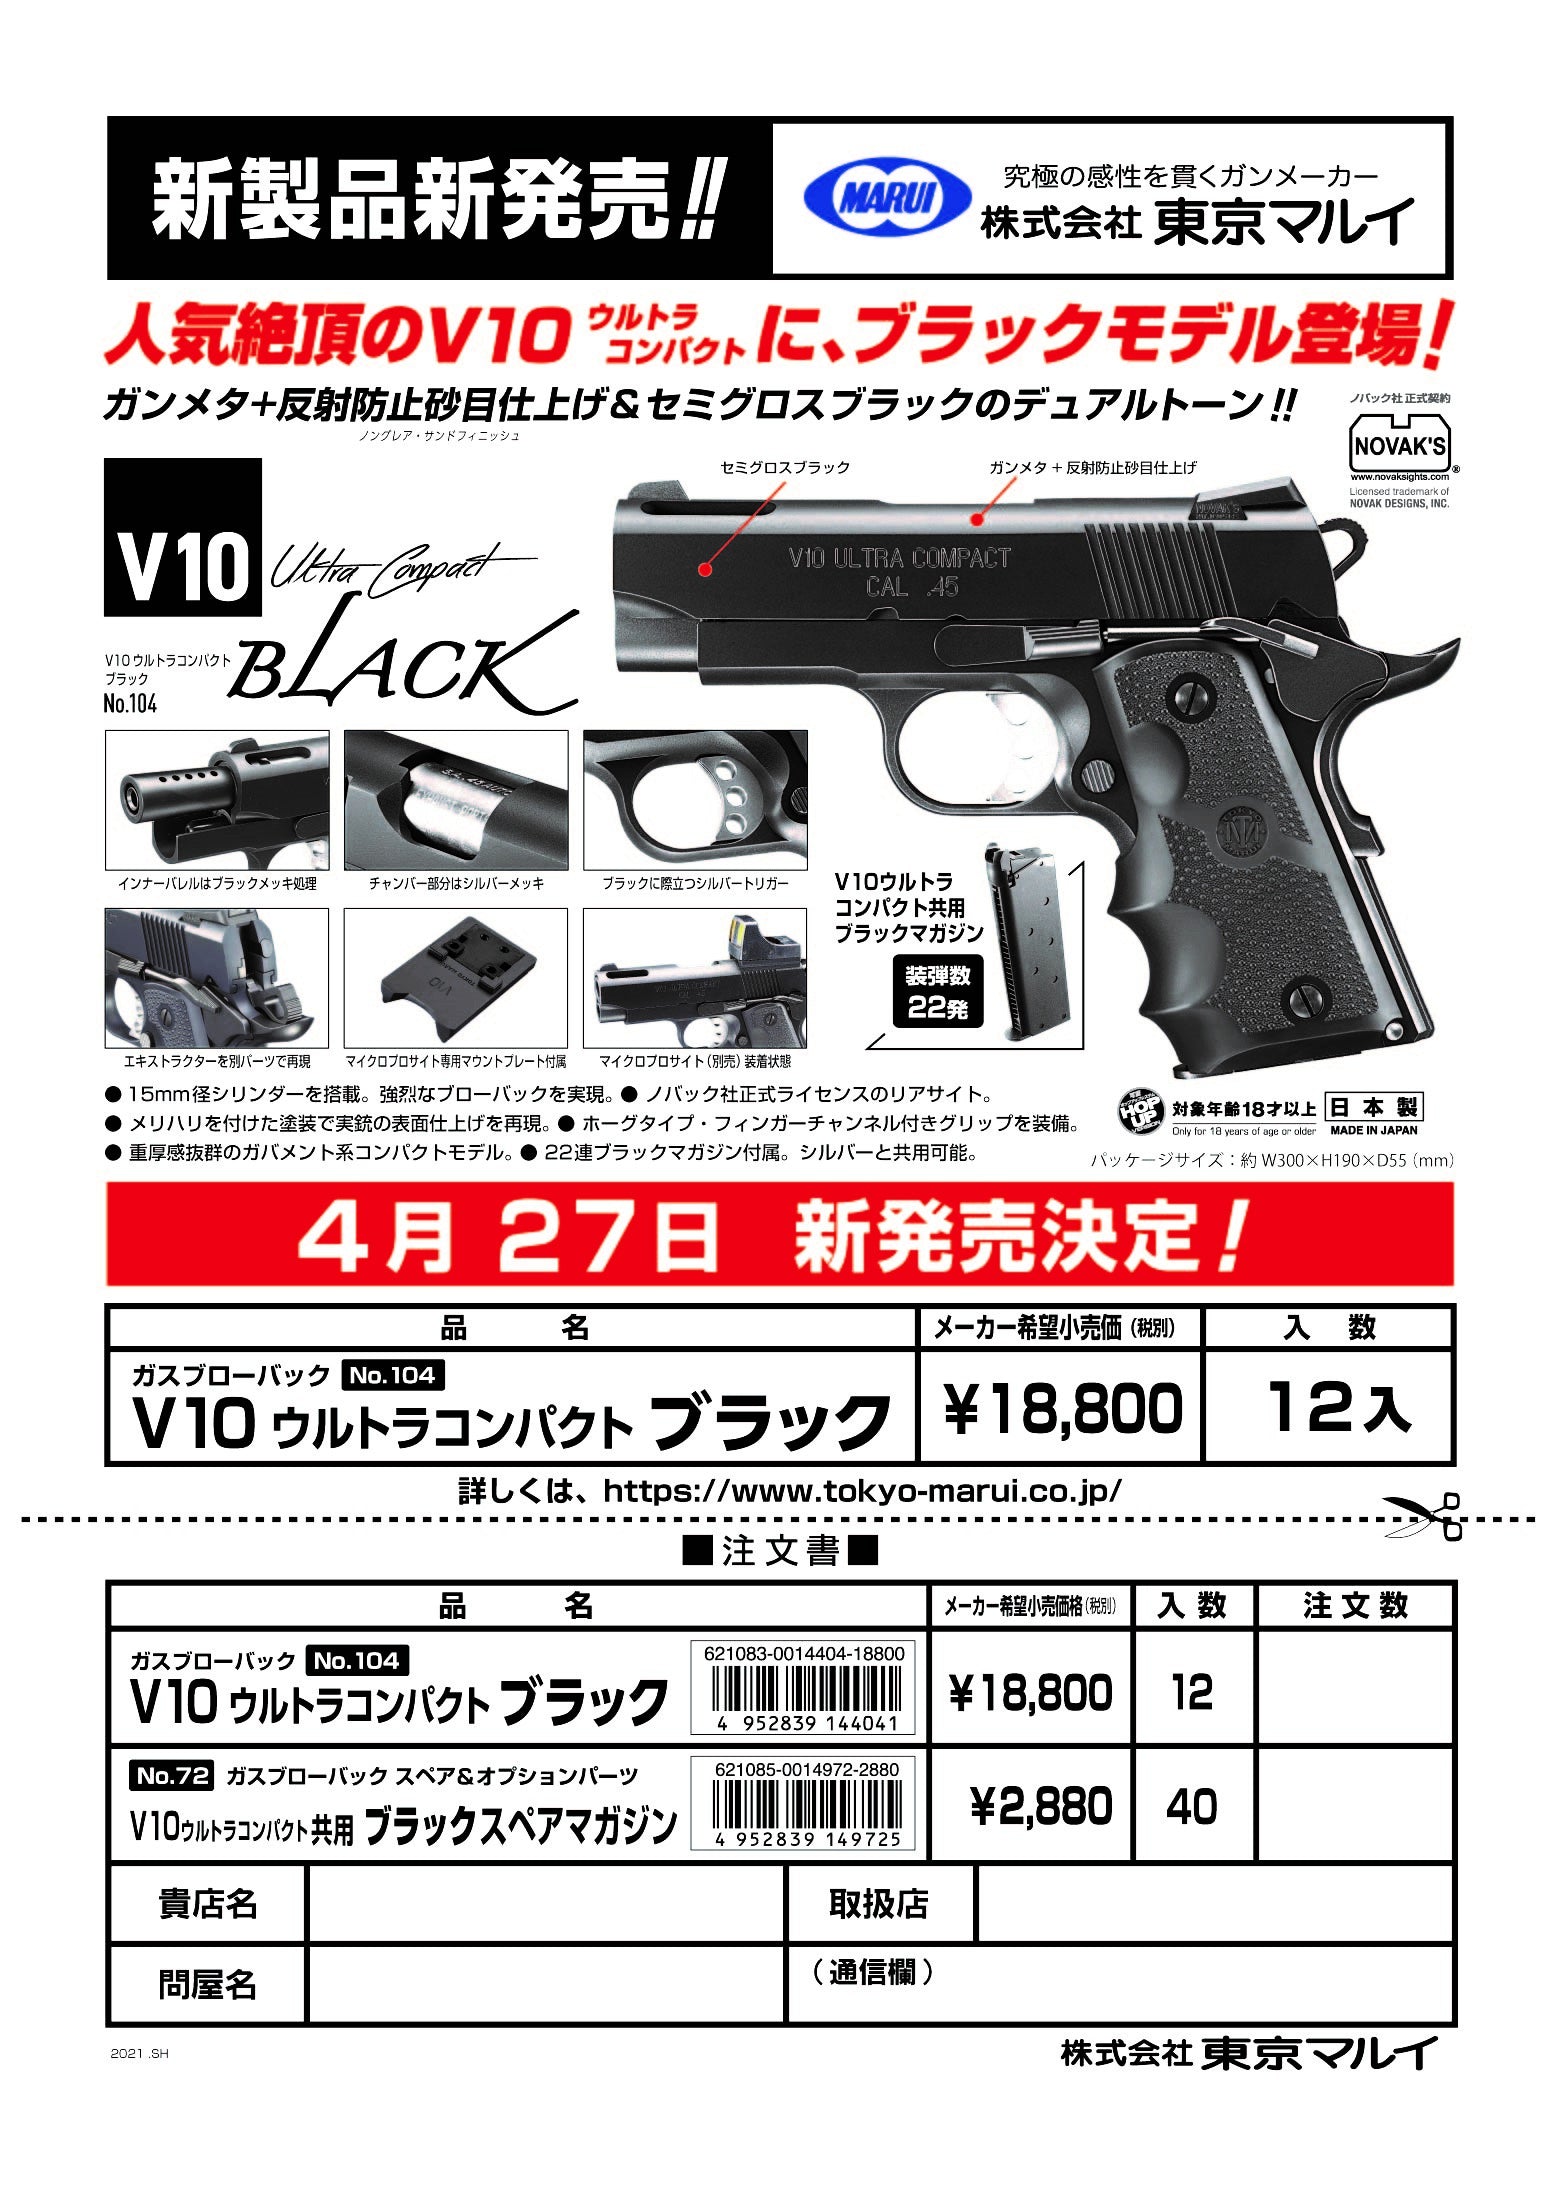 V10 Ultra compact - Black